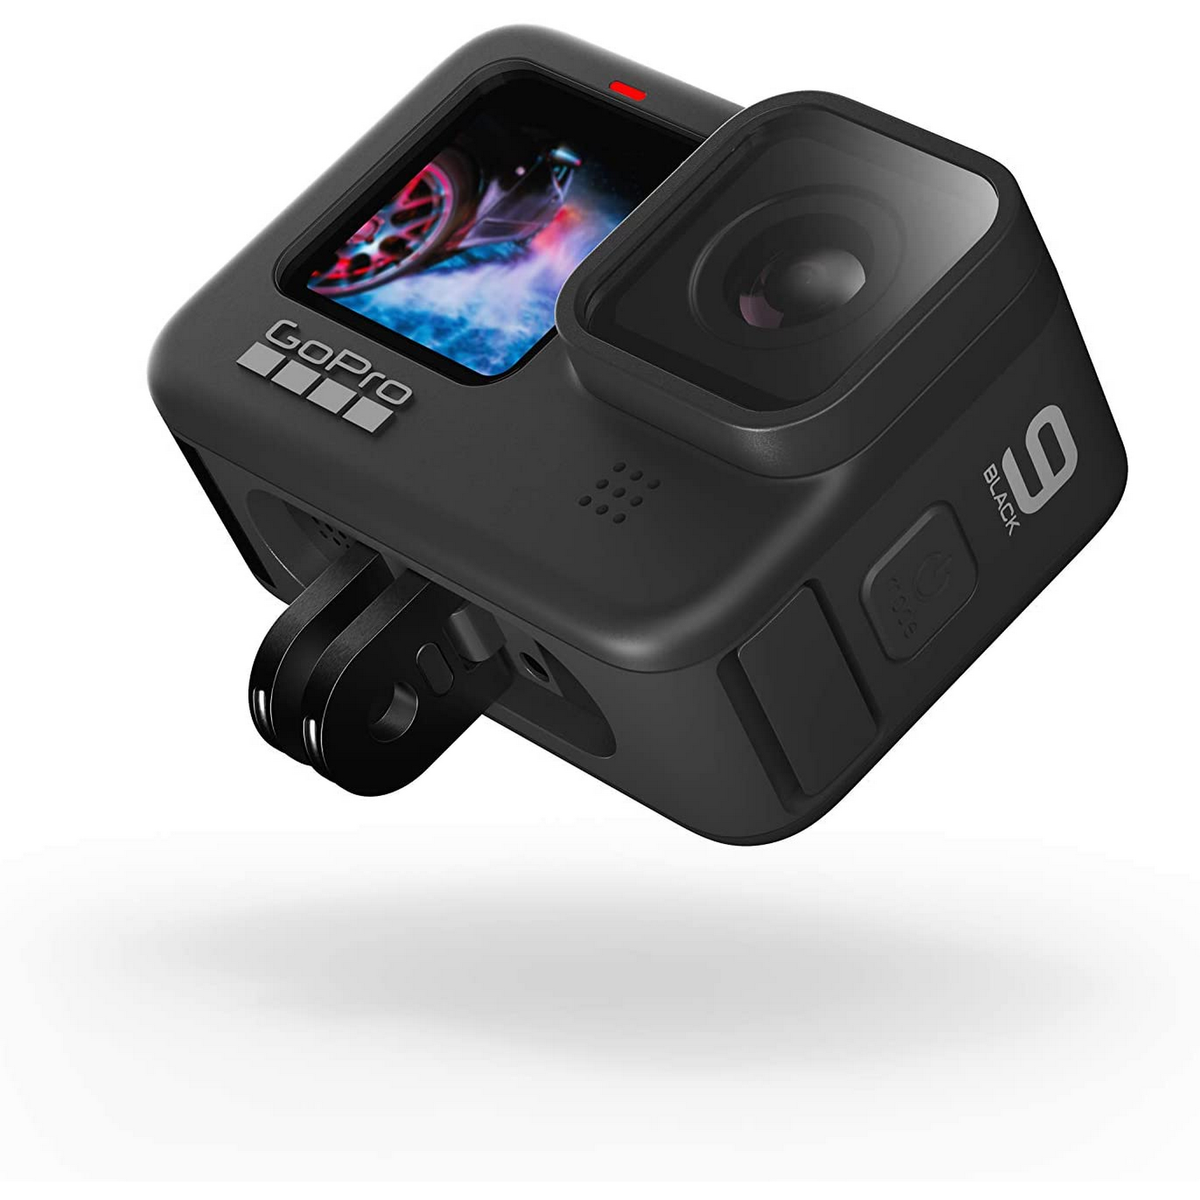 Touchscreen Cam GOPRO BLACK WLAN, Fernbedienung, HERO BUNDLE inkl. ACCESSORY 9 HARD Action